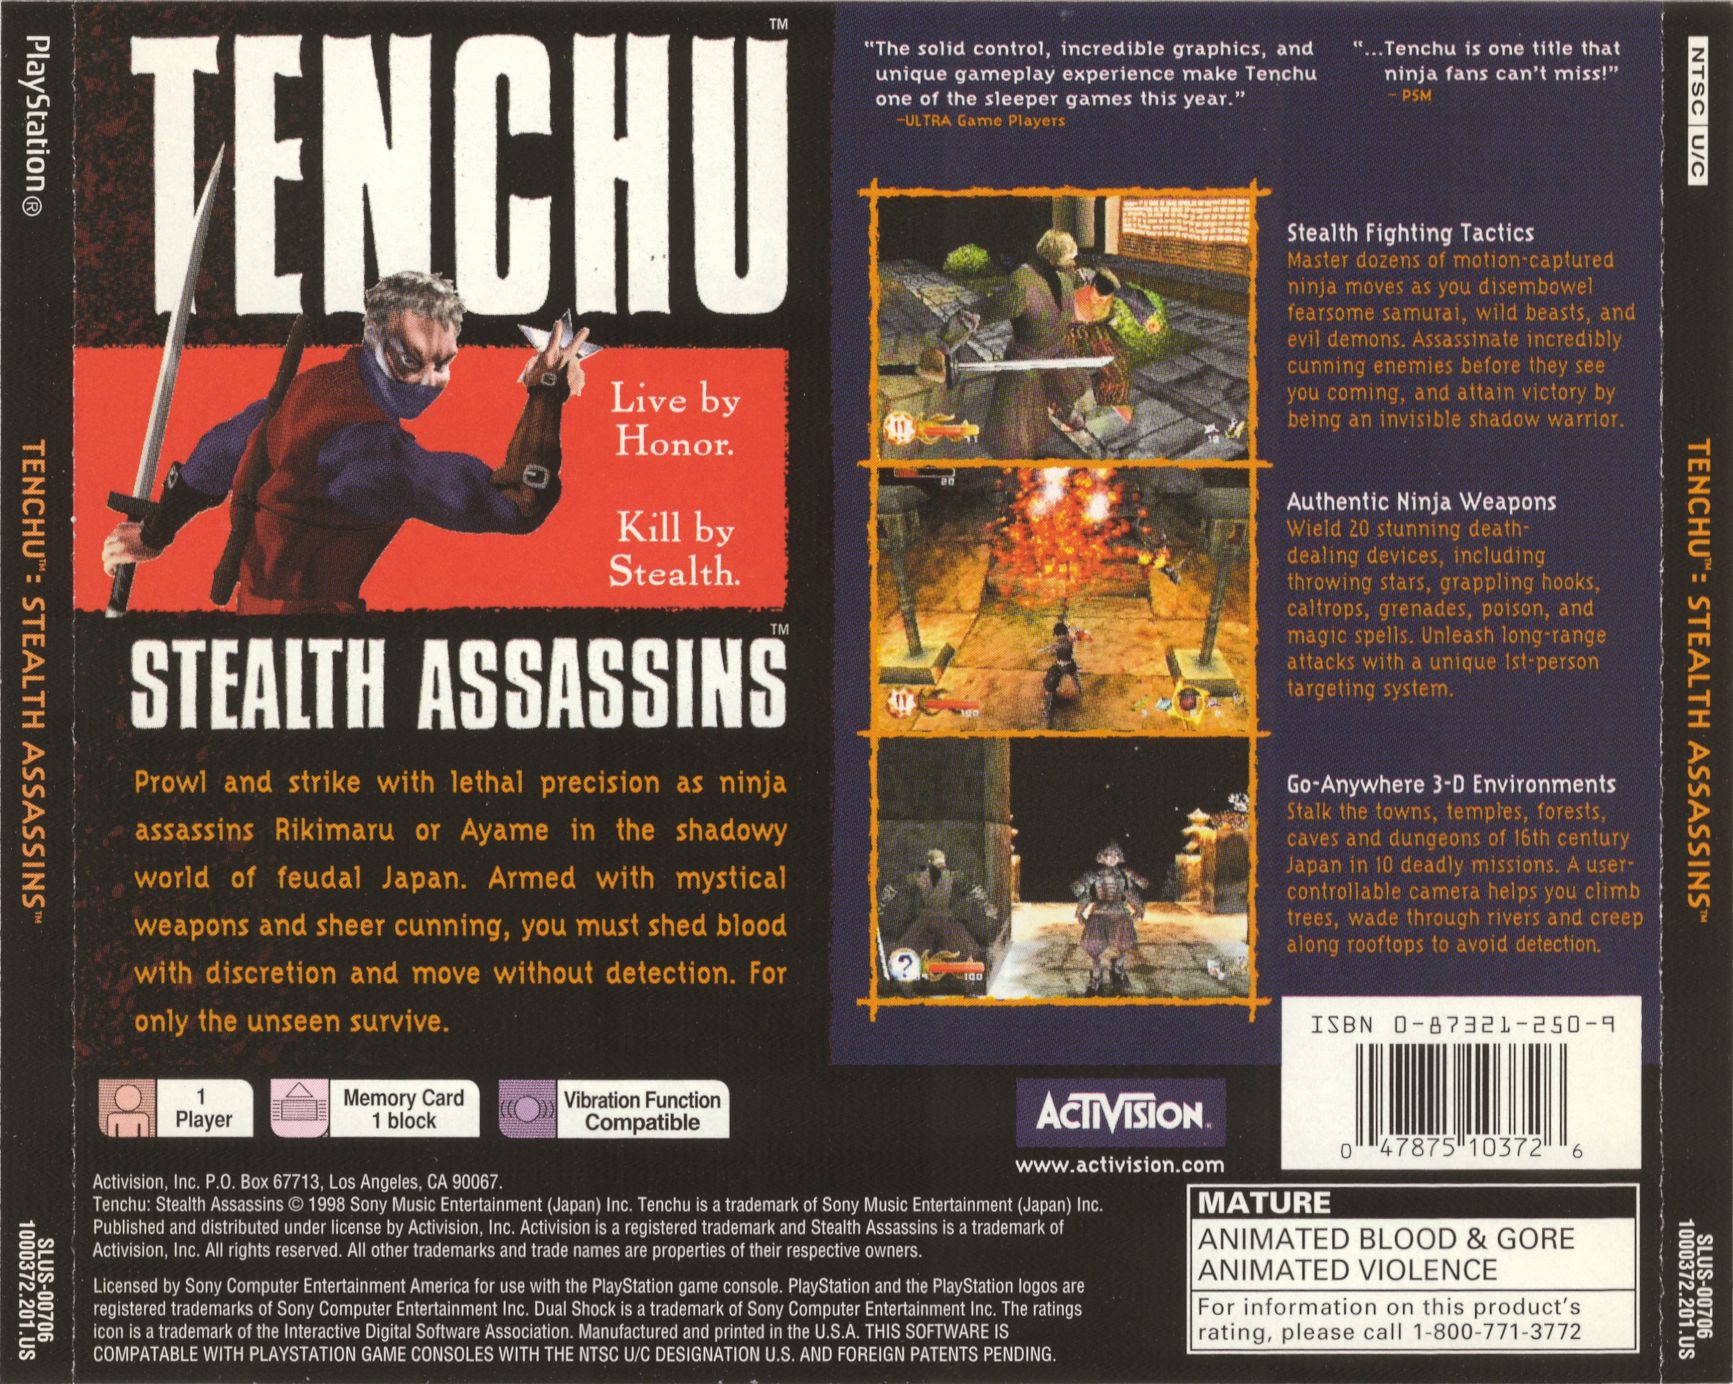 Tenchu - Stealth Assassins PSX cover